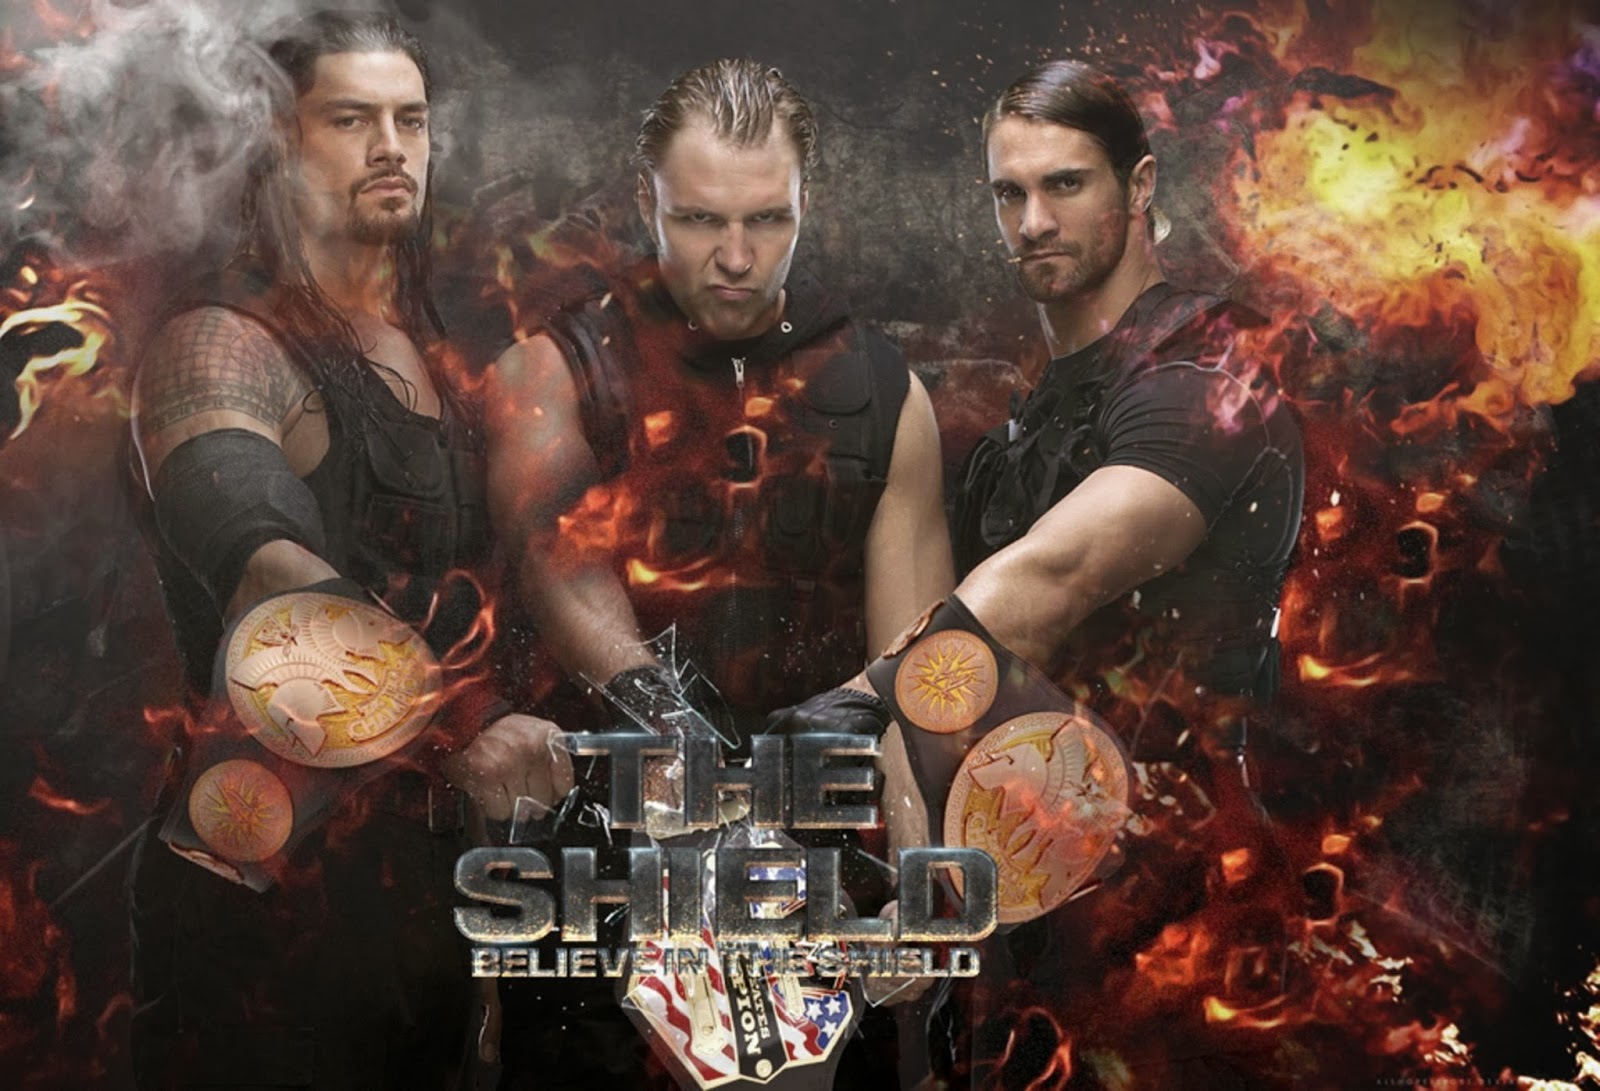 The Shield Hd Wallpapers Free Download WWE HD WALLPAPER FREE